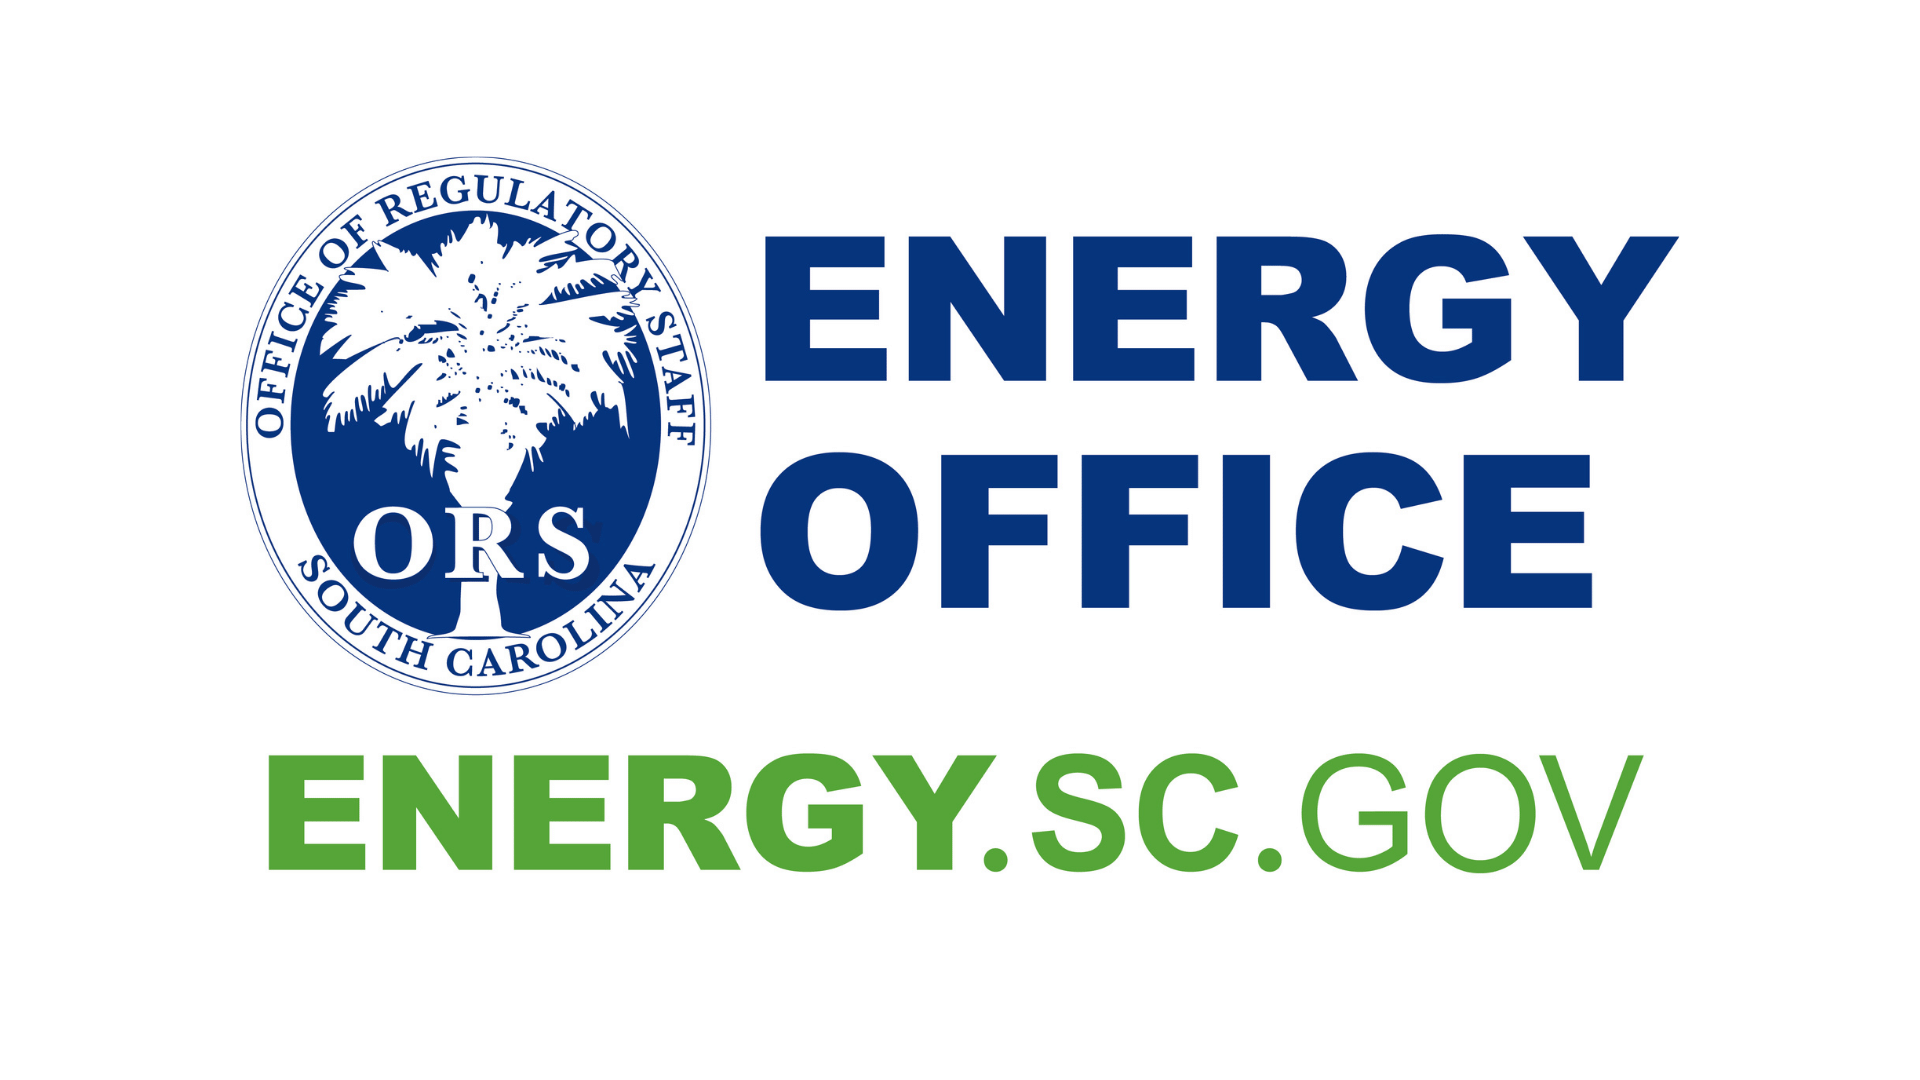 The South Carolina Energy Office